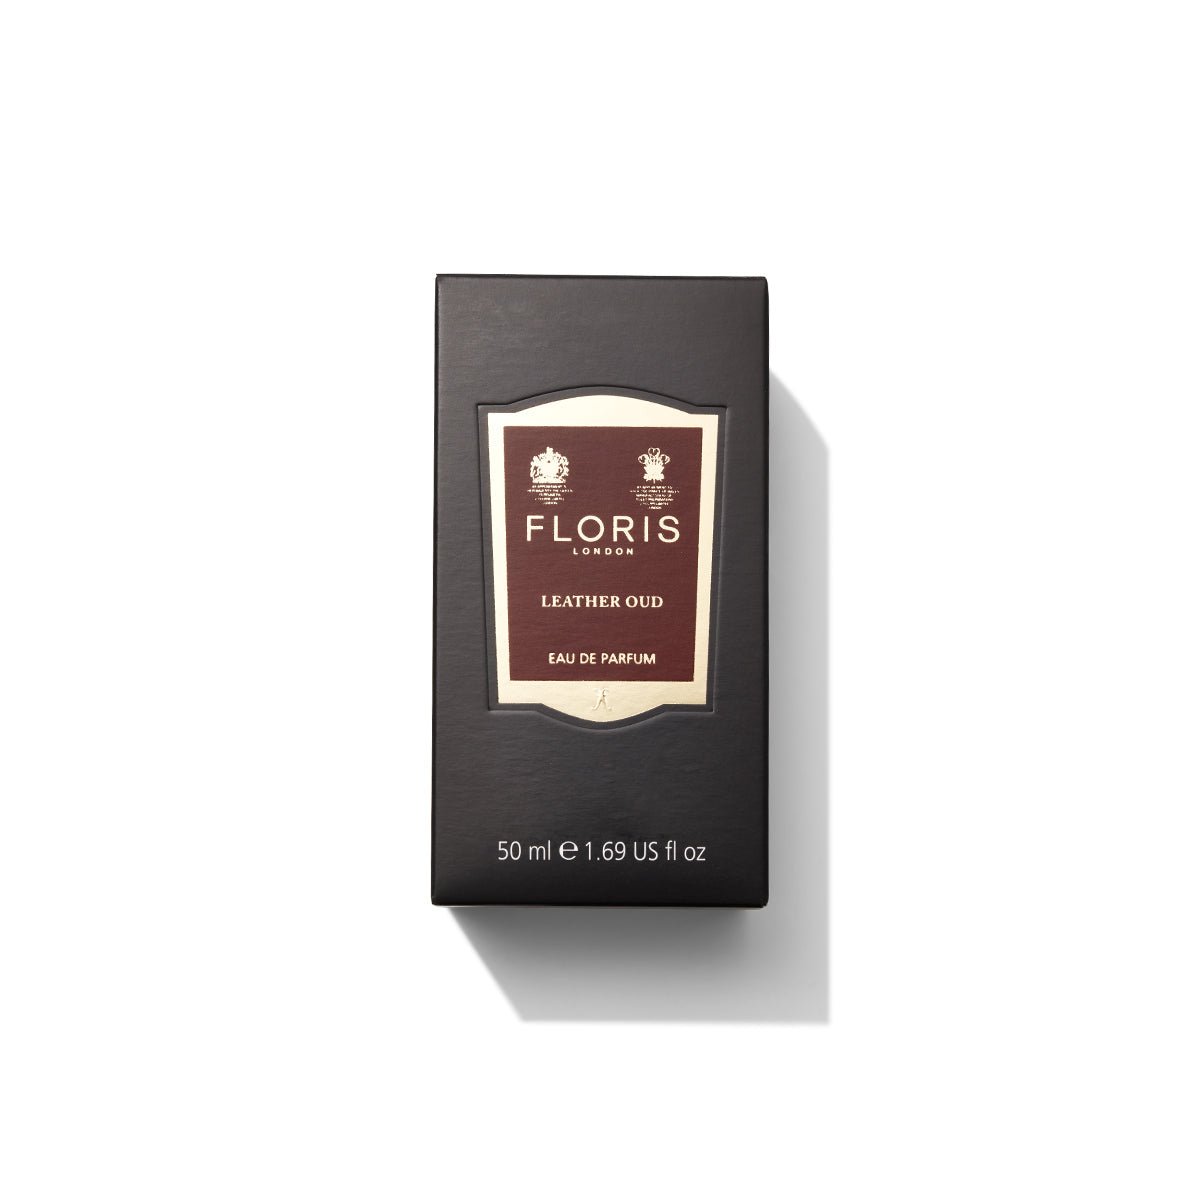 Floris Leather Oud EDP | My Perfume Shop Australia